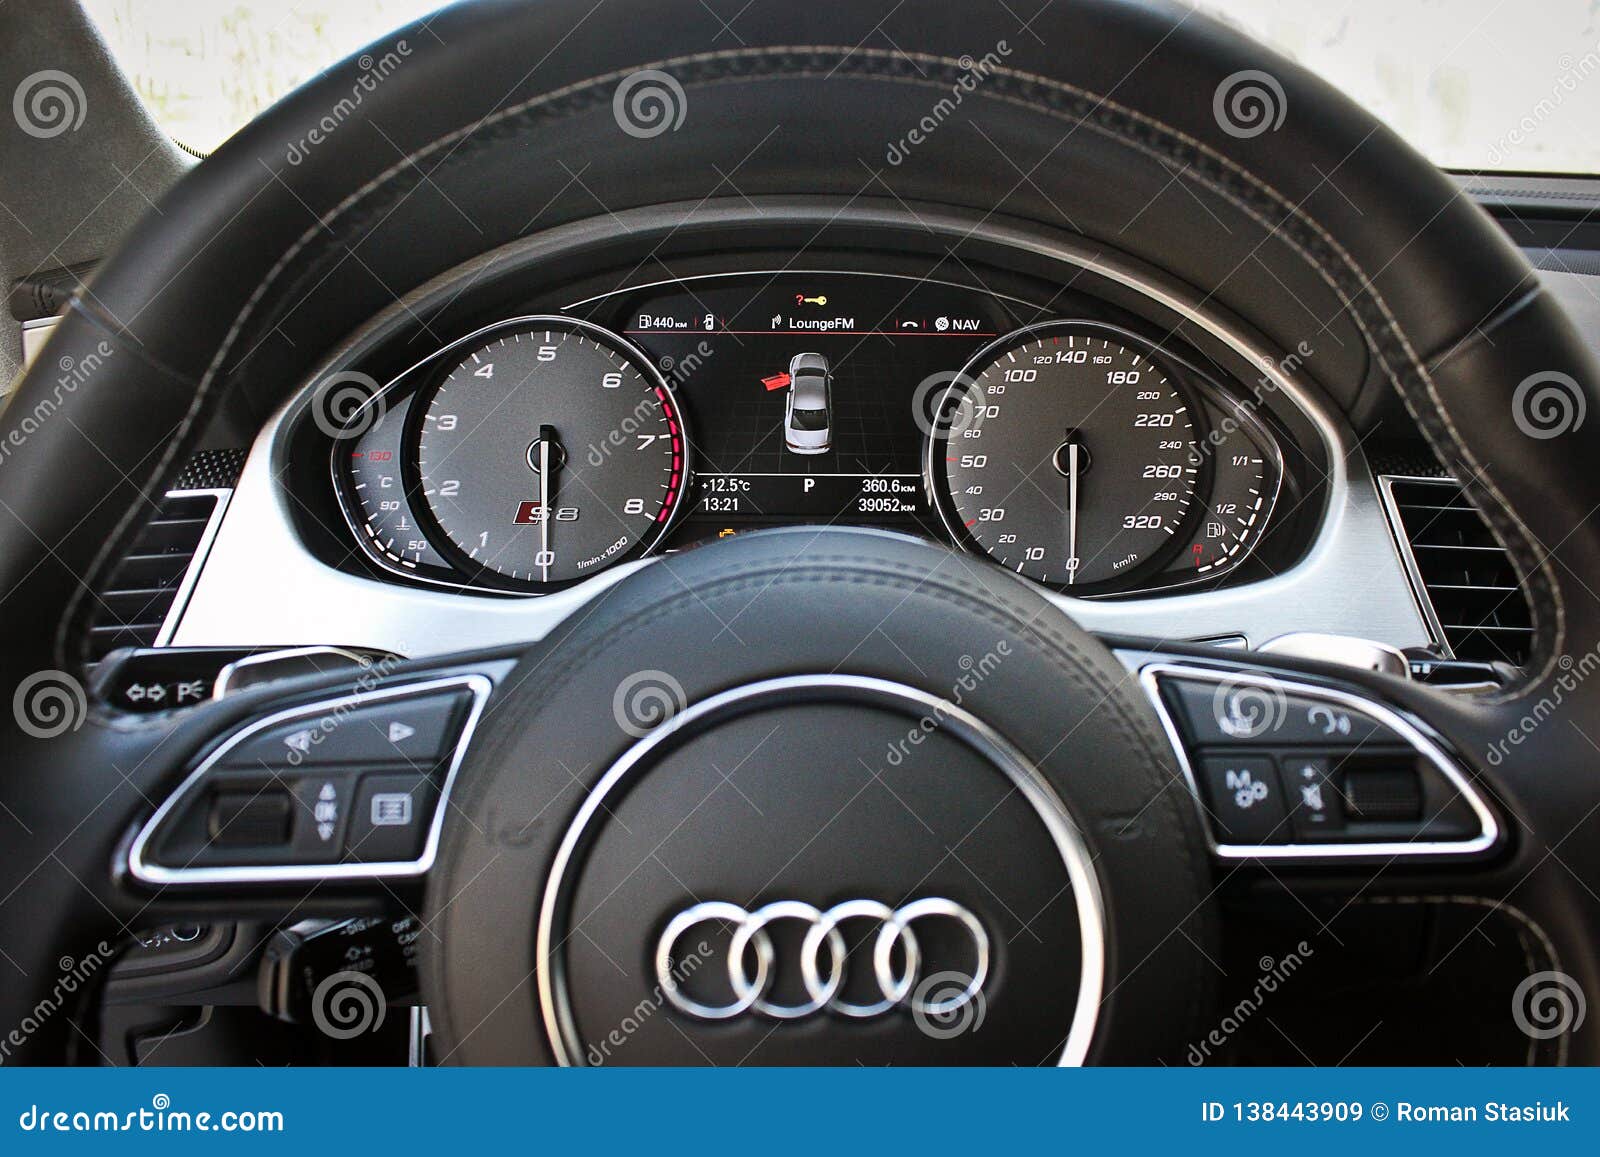 Kiev Ukraine April 10 2015 Audi S8 View Of The Interior